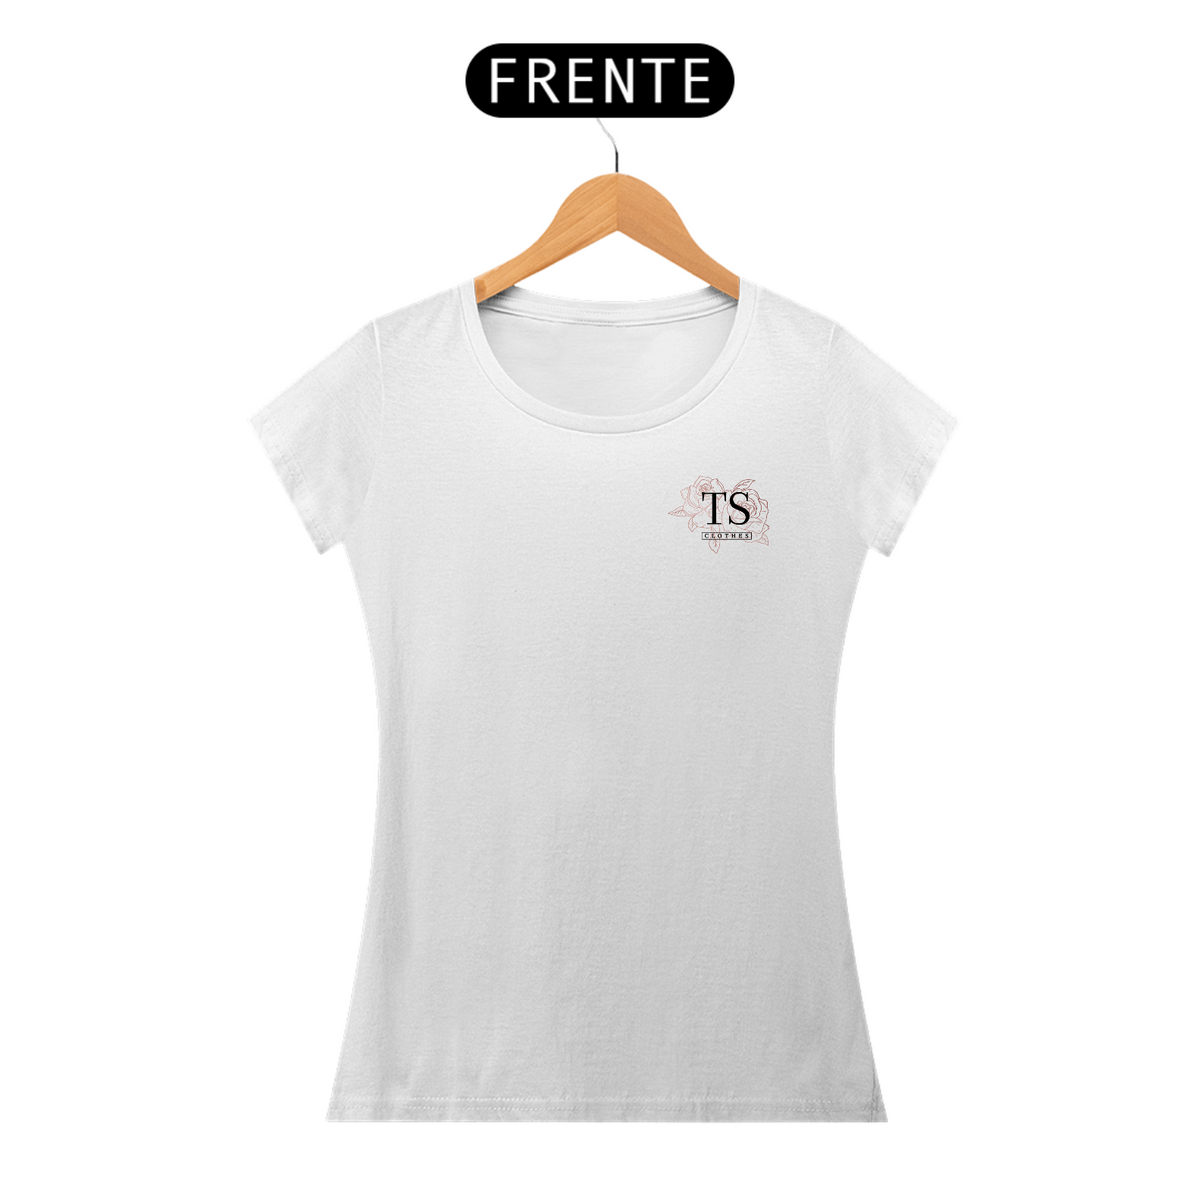 Nome do produto: Camiseta Feminina \